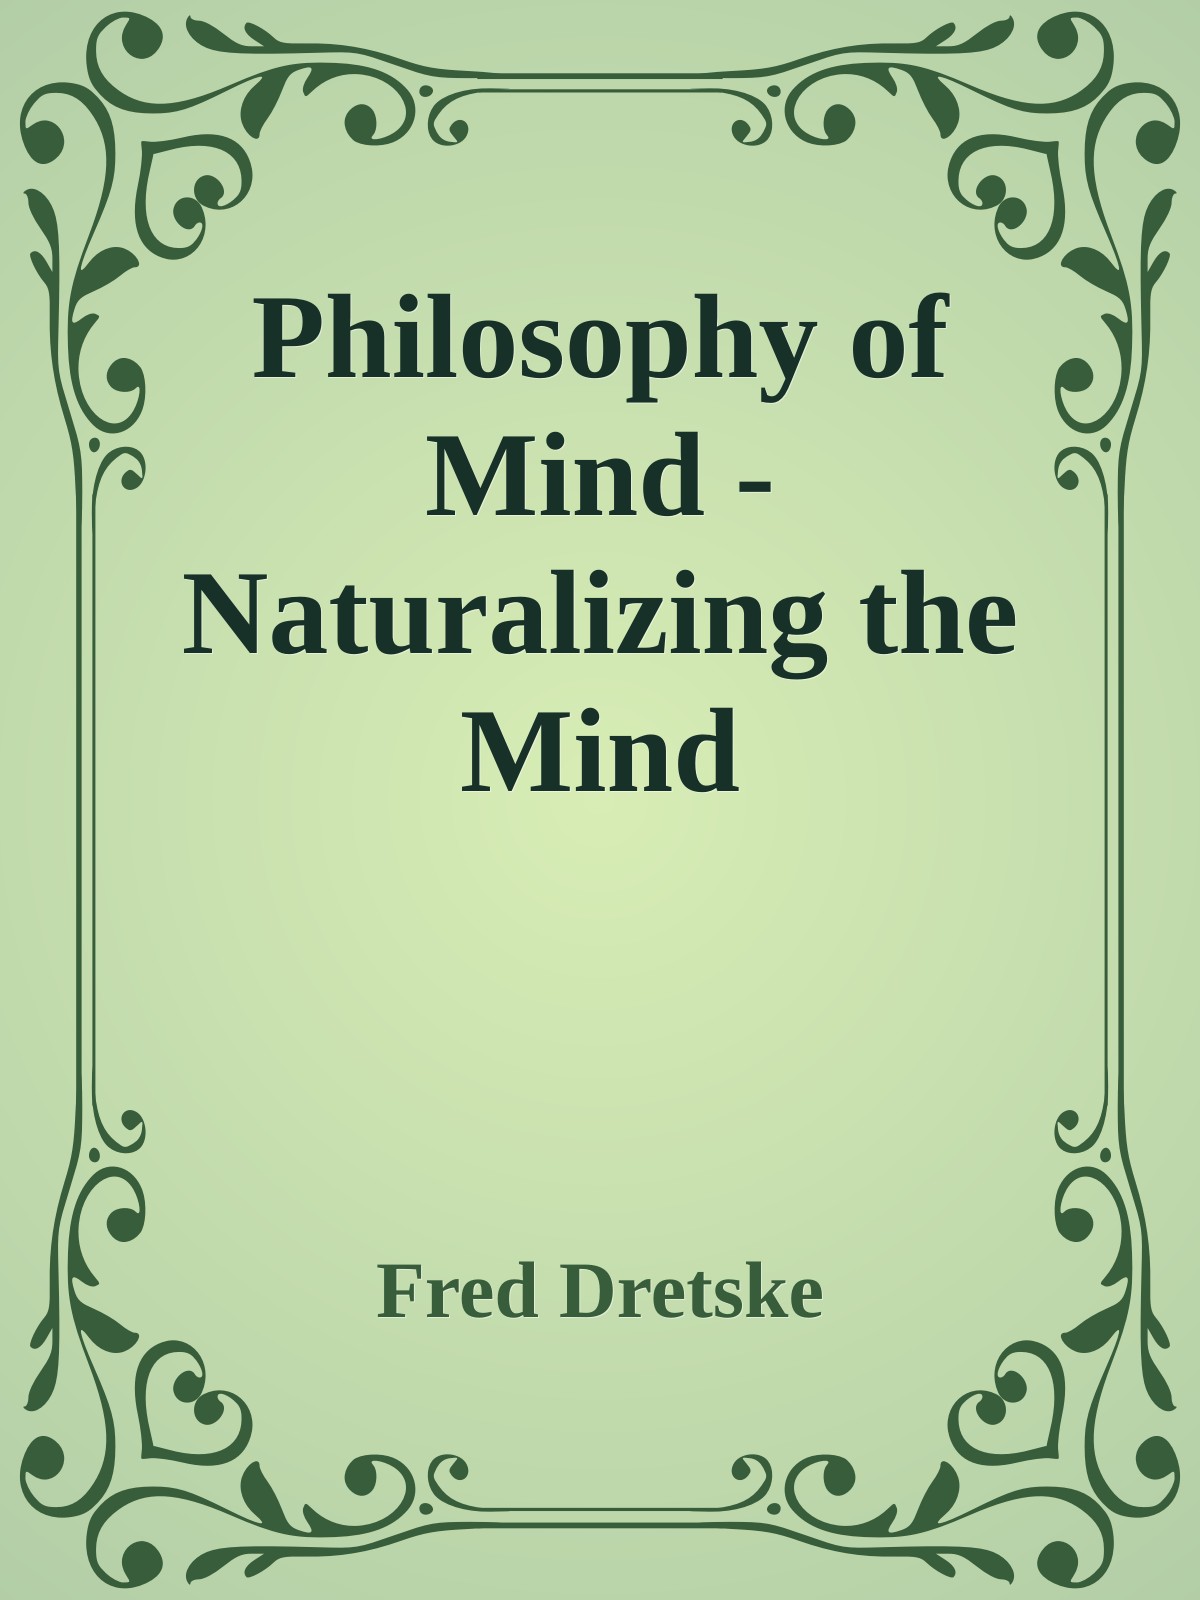 Philosophy of Mind - Naturalizing the Mind